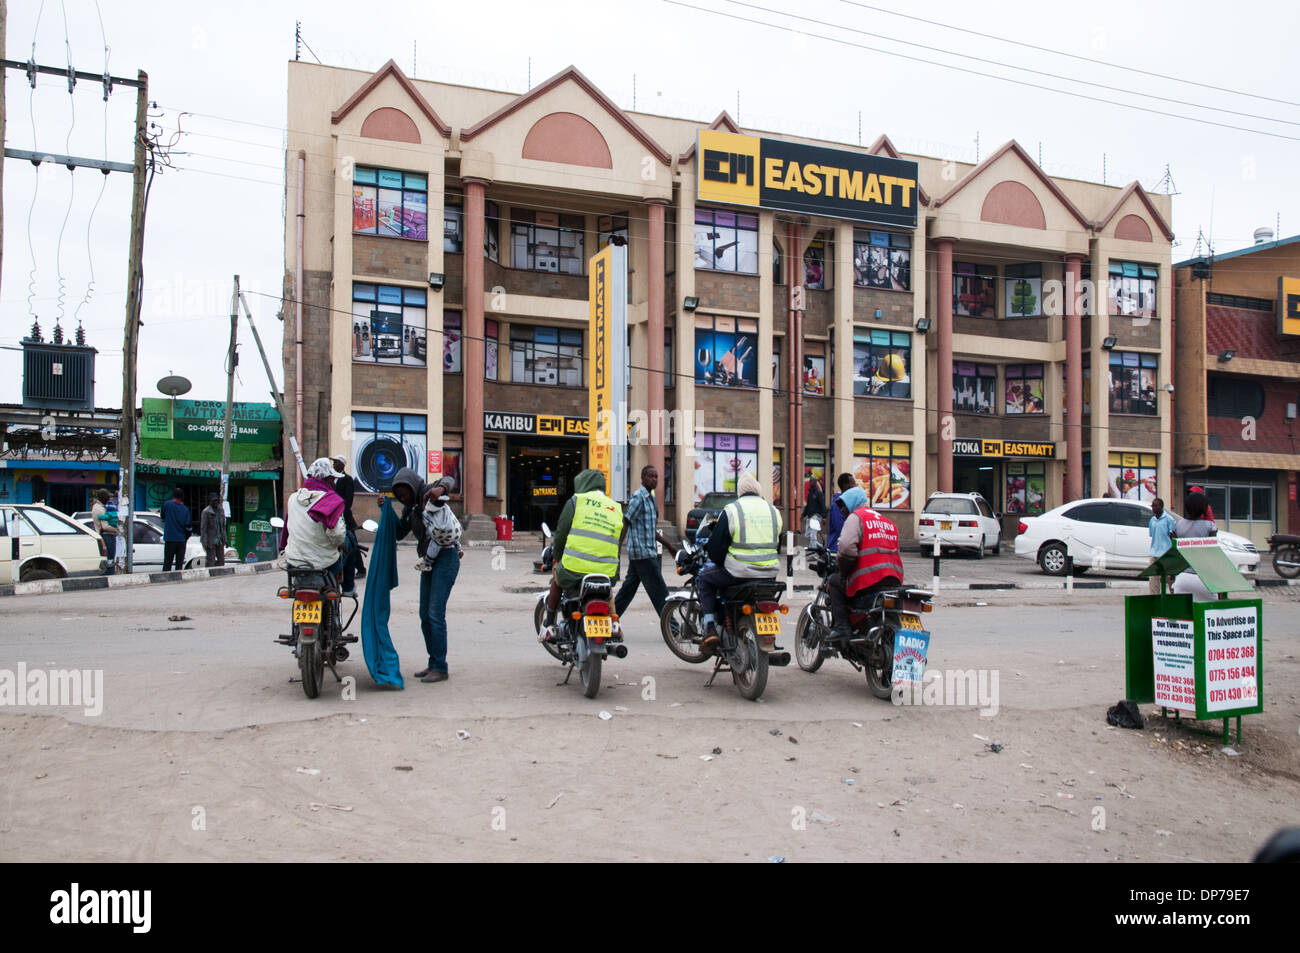 Ciclo motore i taxi attendono i clienti al supermercato Eastmatt su Nairobi Namanga Road Kaijado Kenya Africa Foto Stock